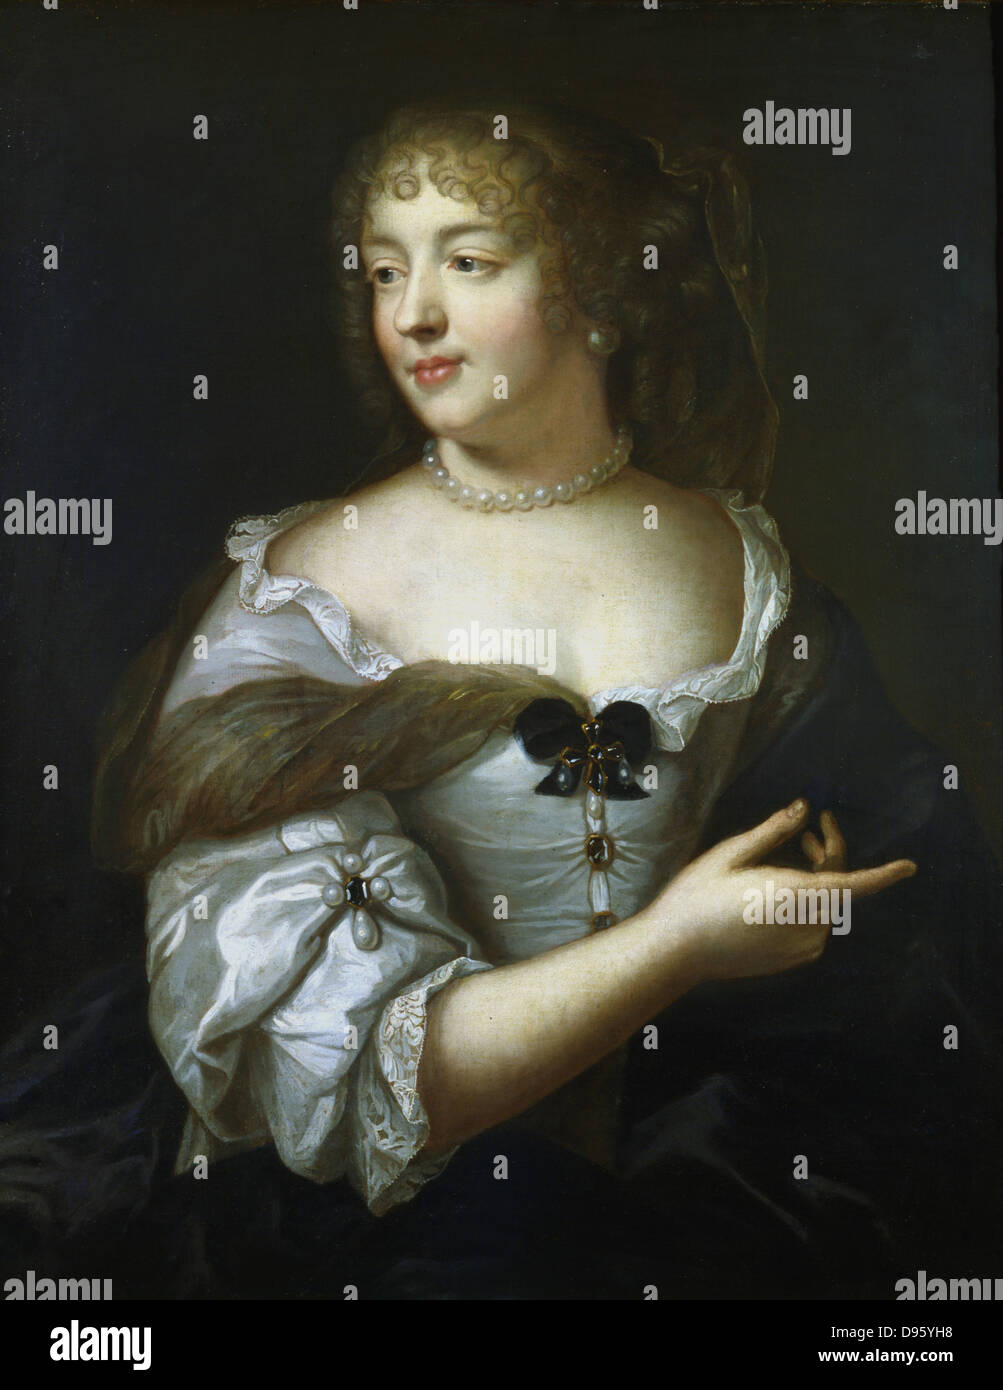 Madame de Sevigne (1626-1696). French courtier and letter writer. Portrait by Claude Lefebvre c1665. Carnavalet, Paris. Stock Photo